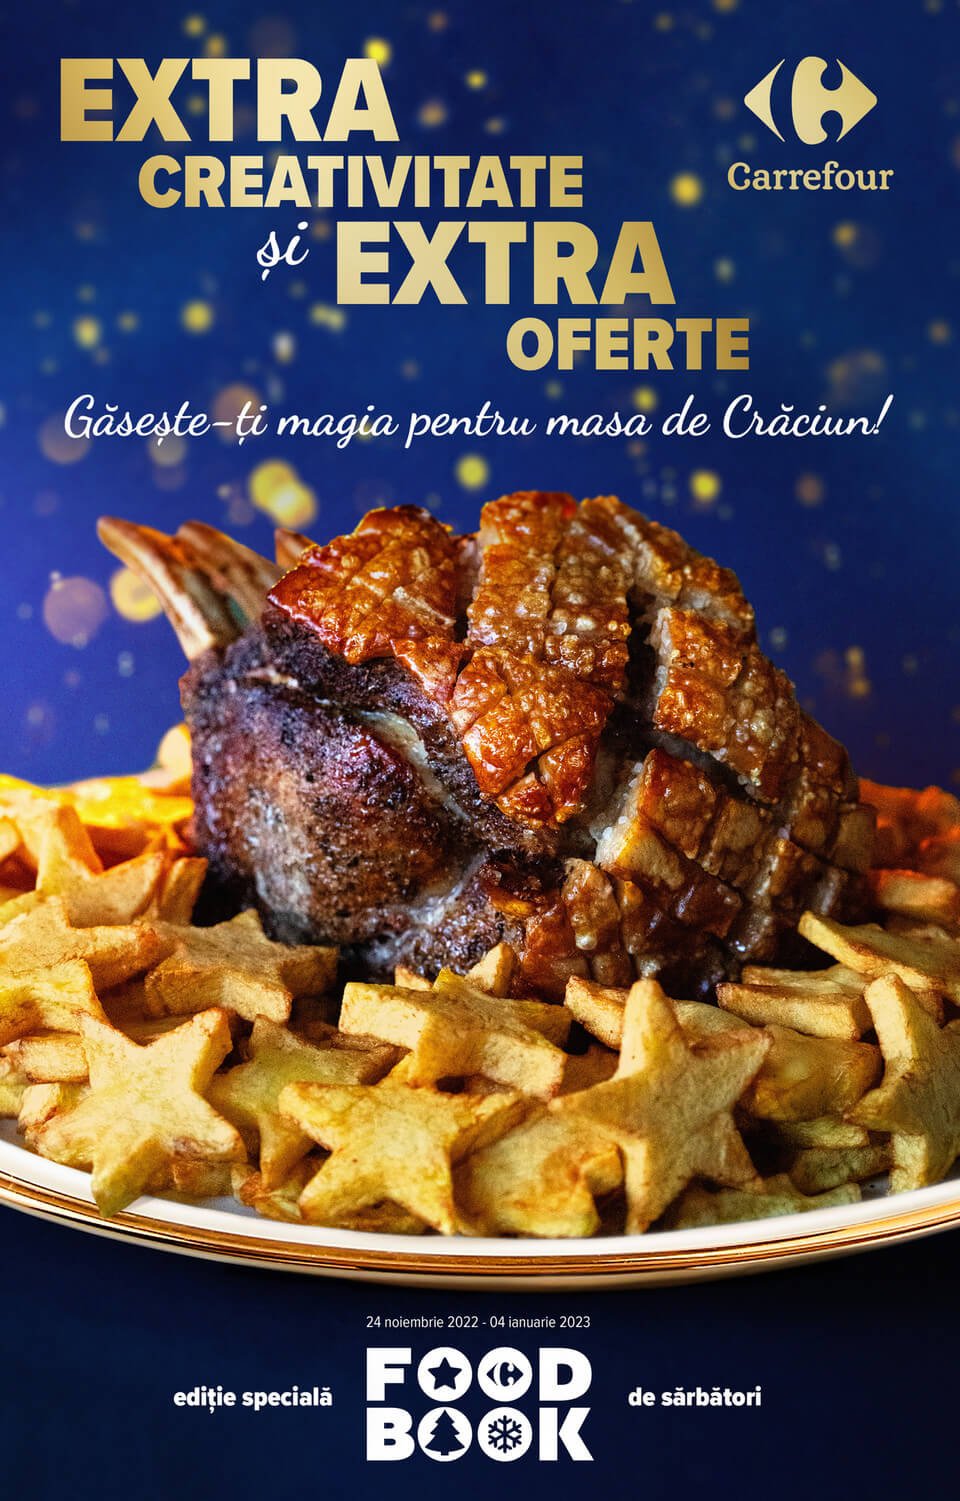 Catalog Carrefour 24 noiembrie 2022 - 4 ianuarie 2023 Foodbook